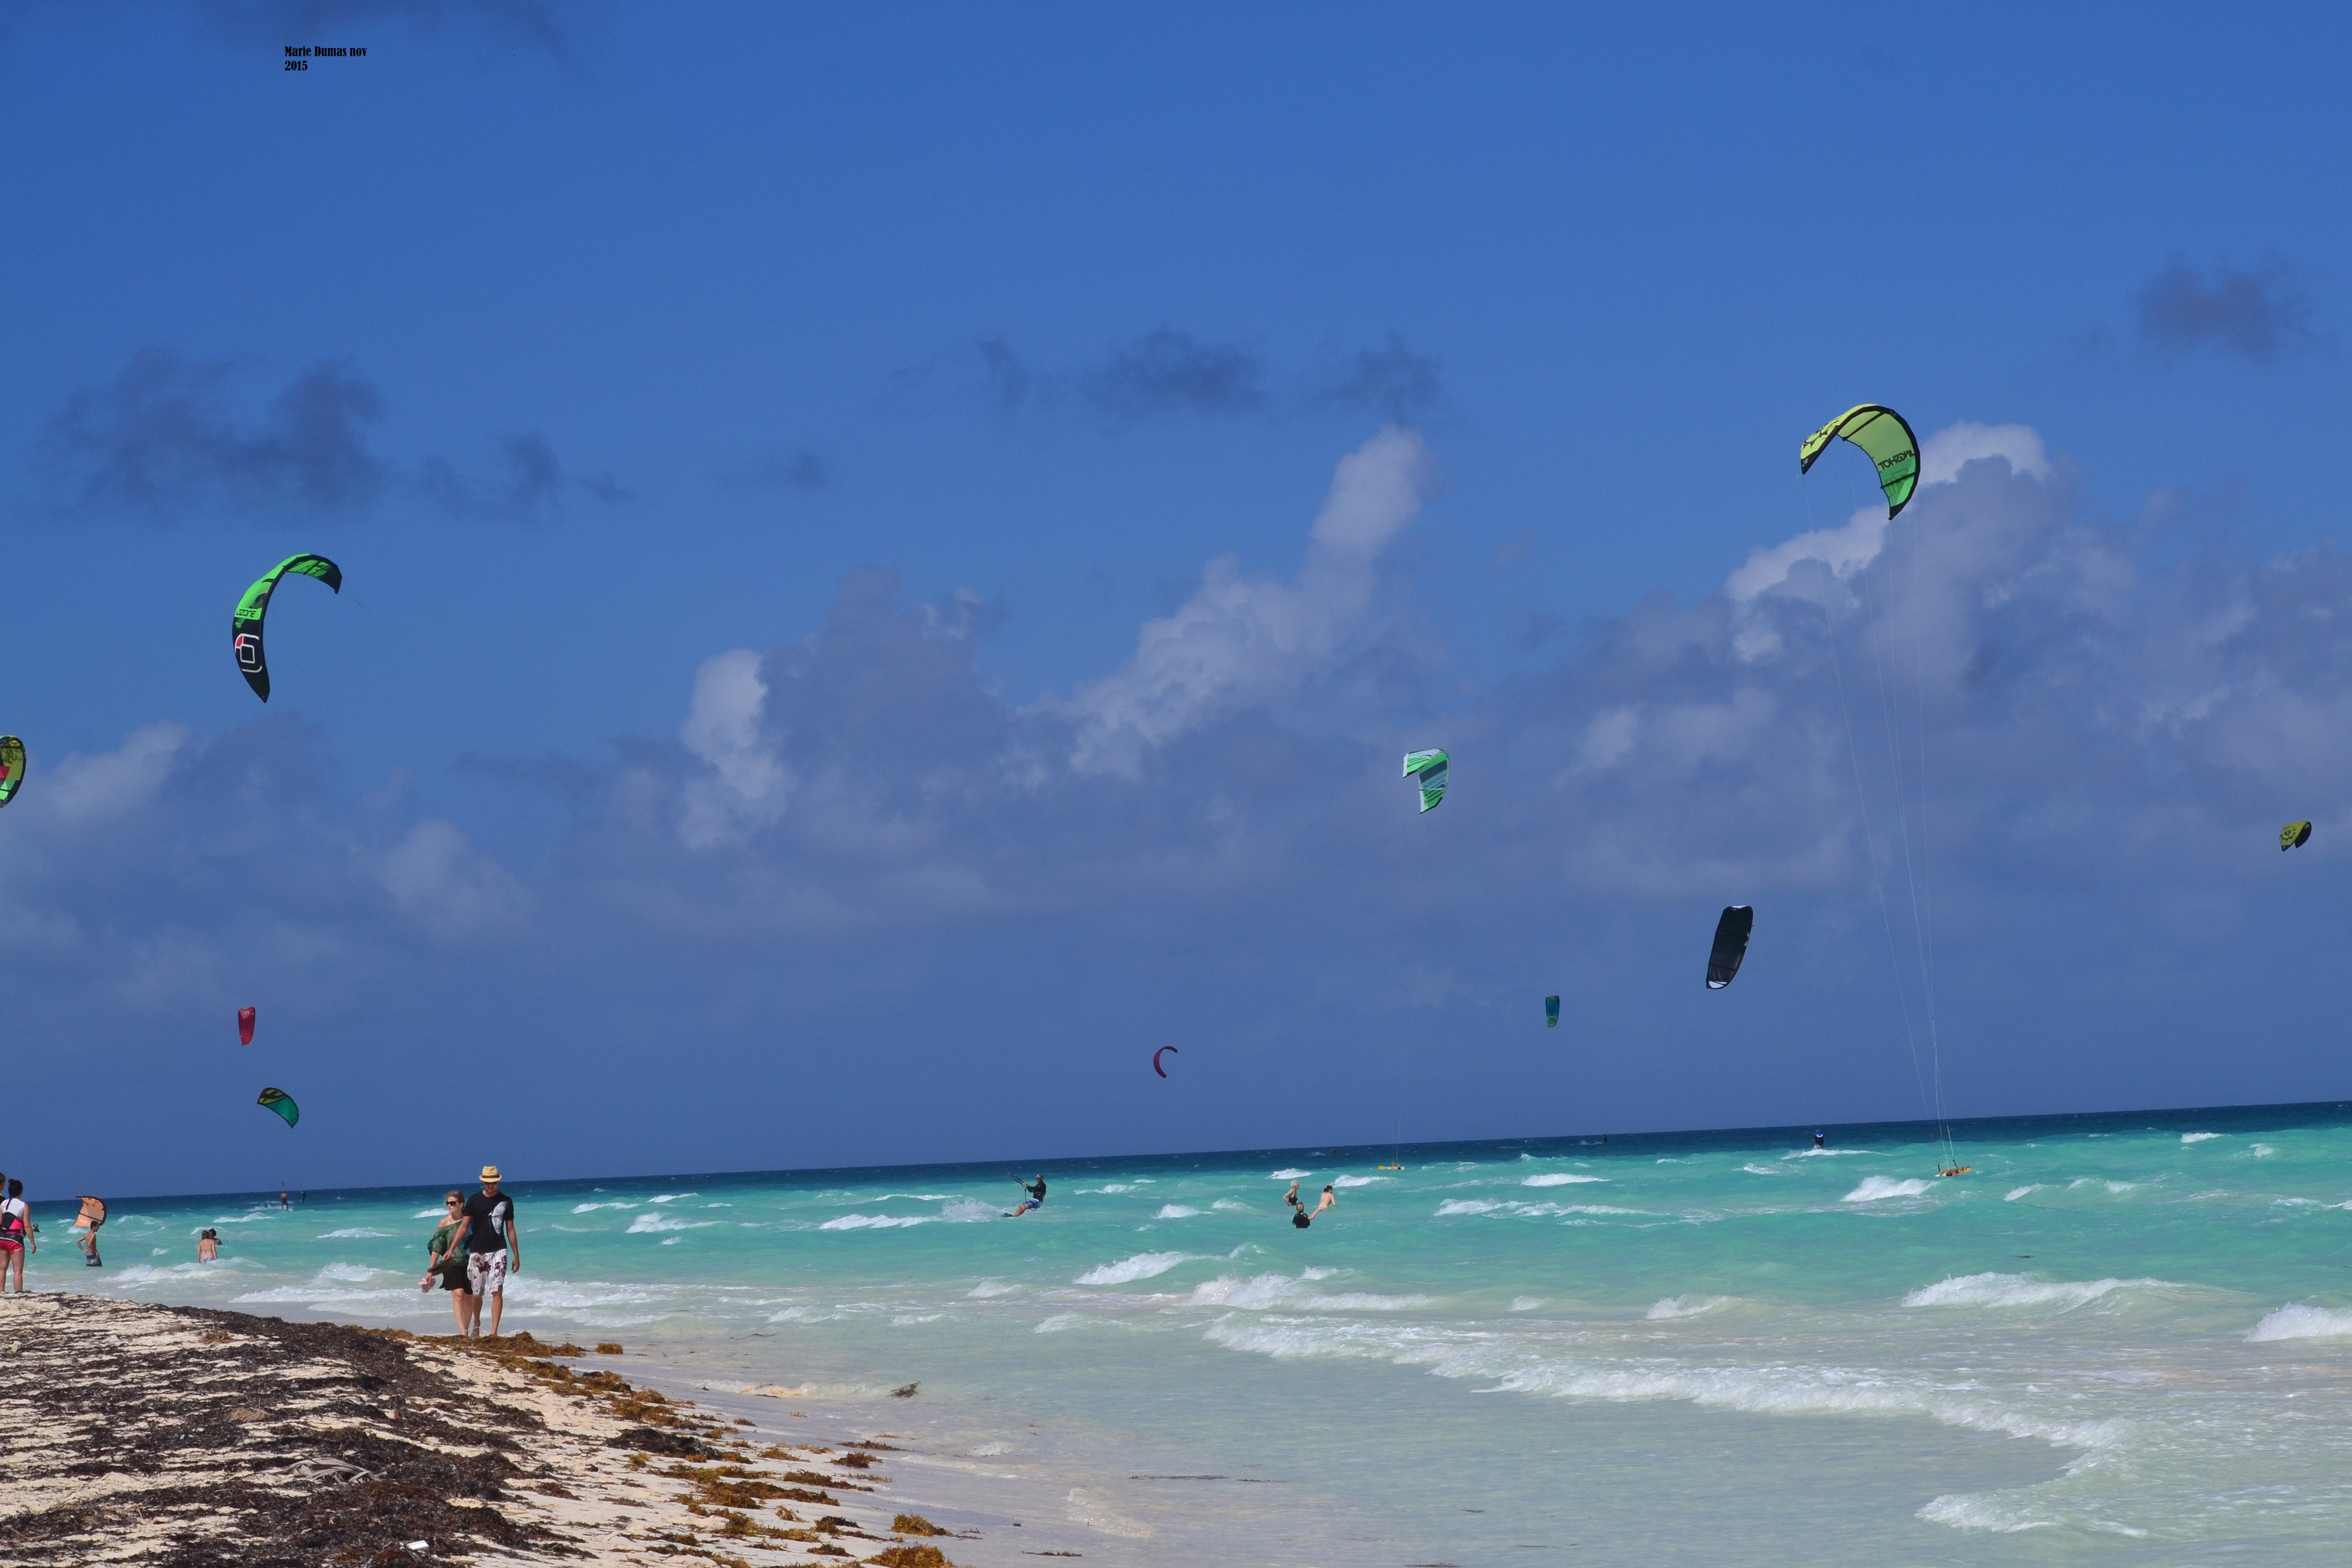 Cuba préservé Playa de Gaviotas : Plages : Mer : Cayo Santa María : Îles cubaines : Cuba : Routard.com